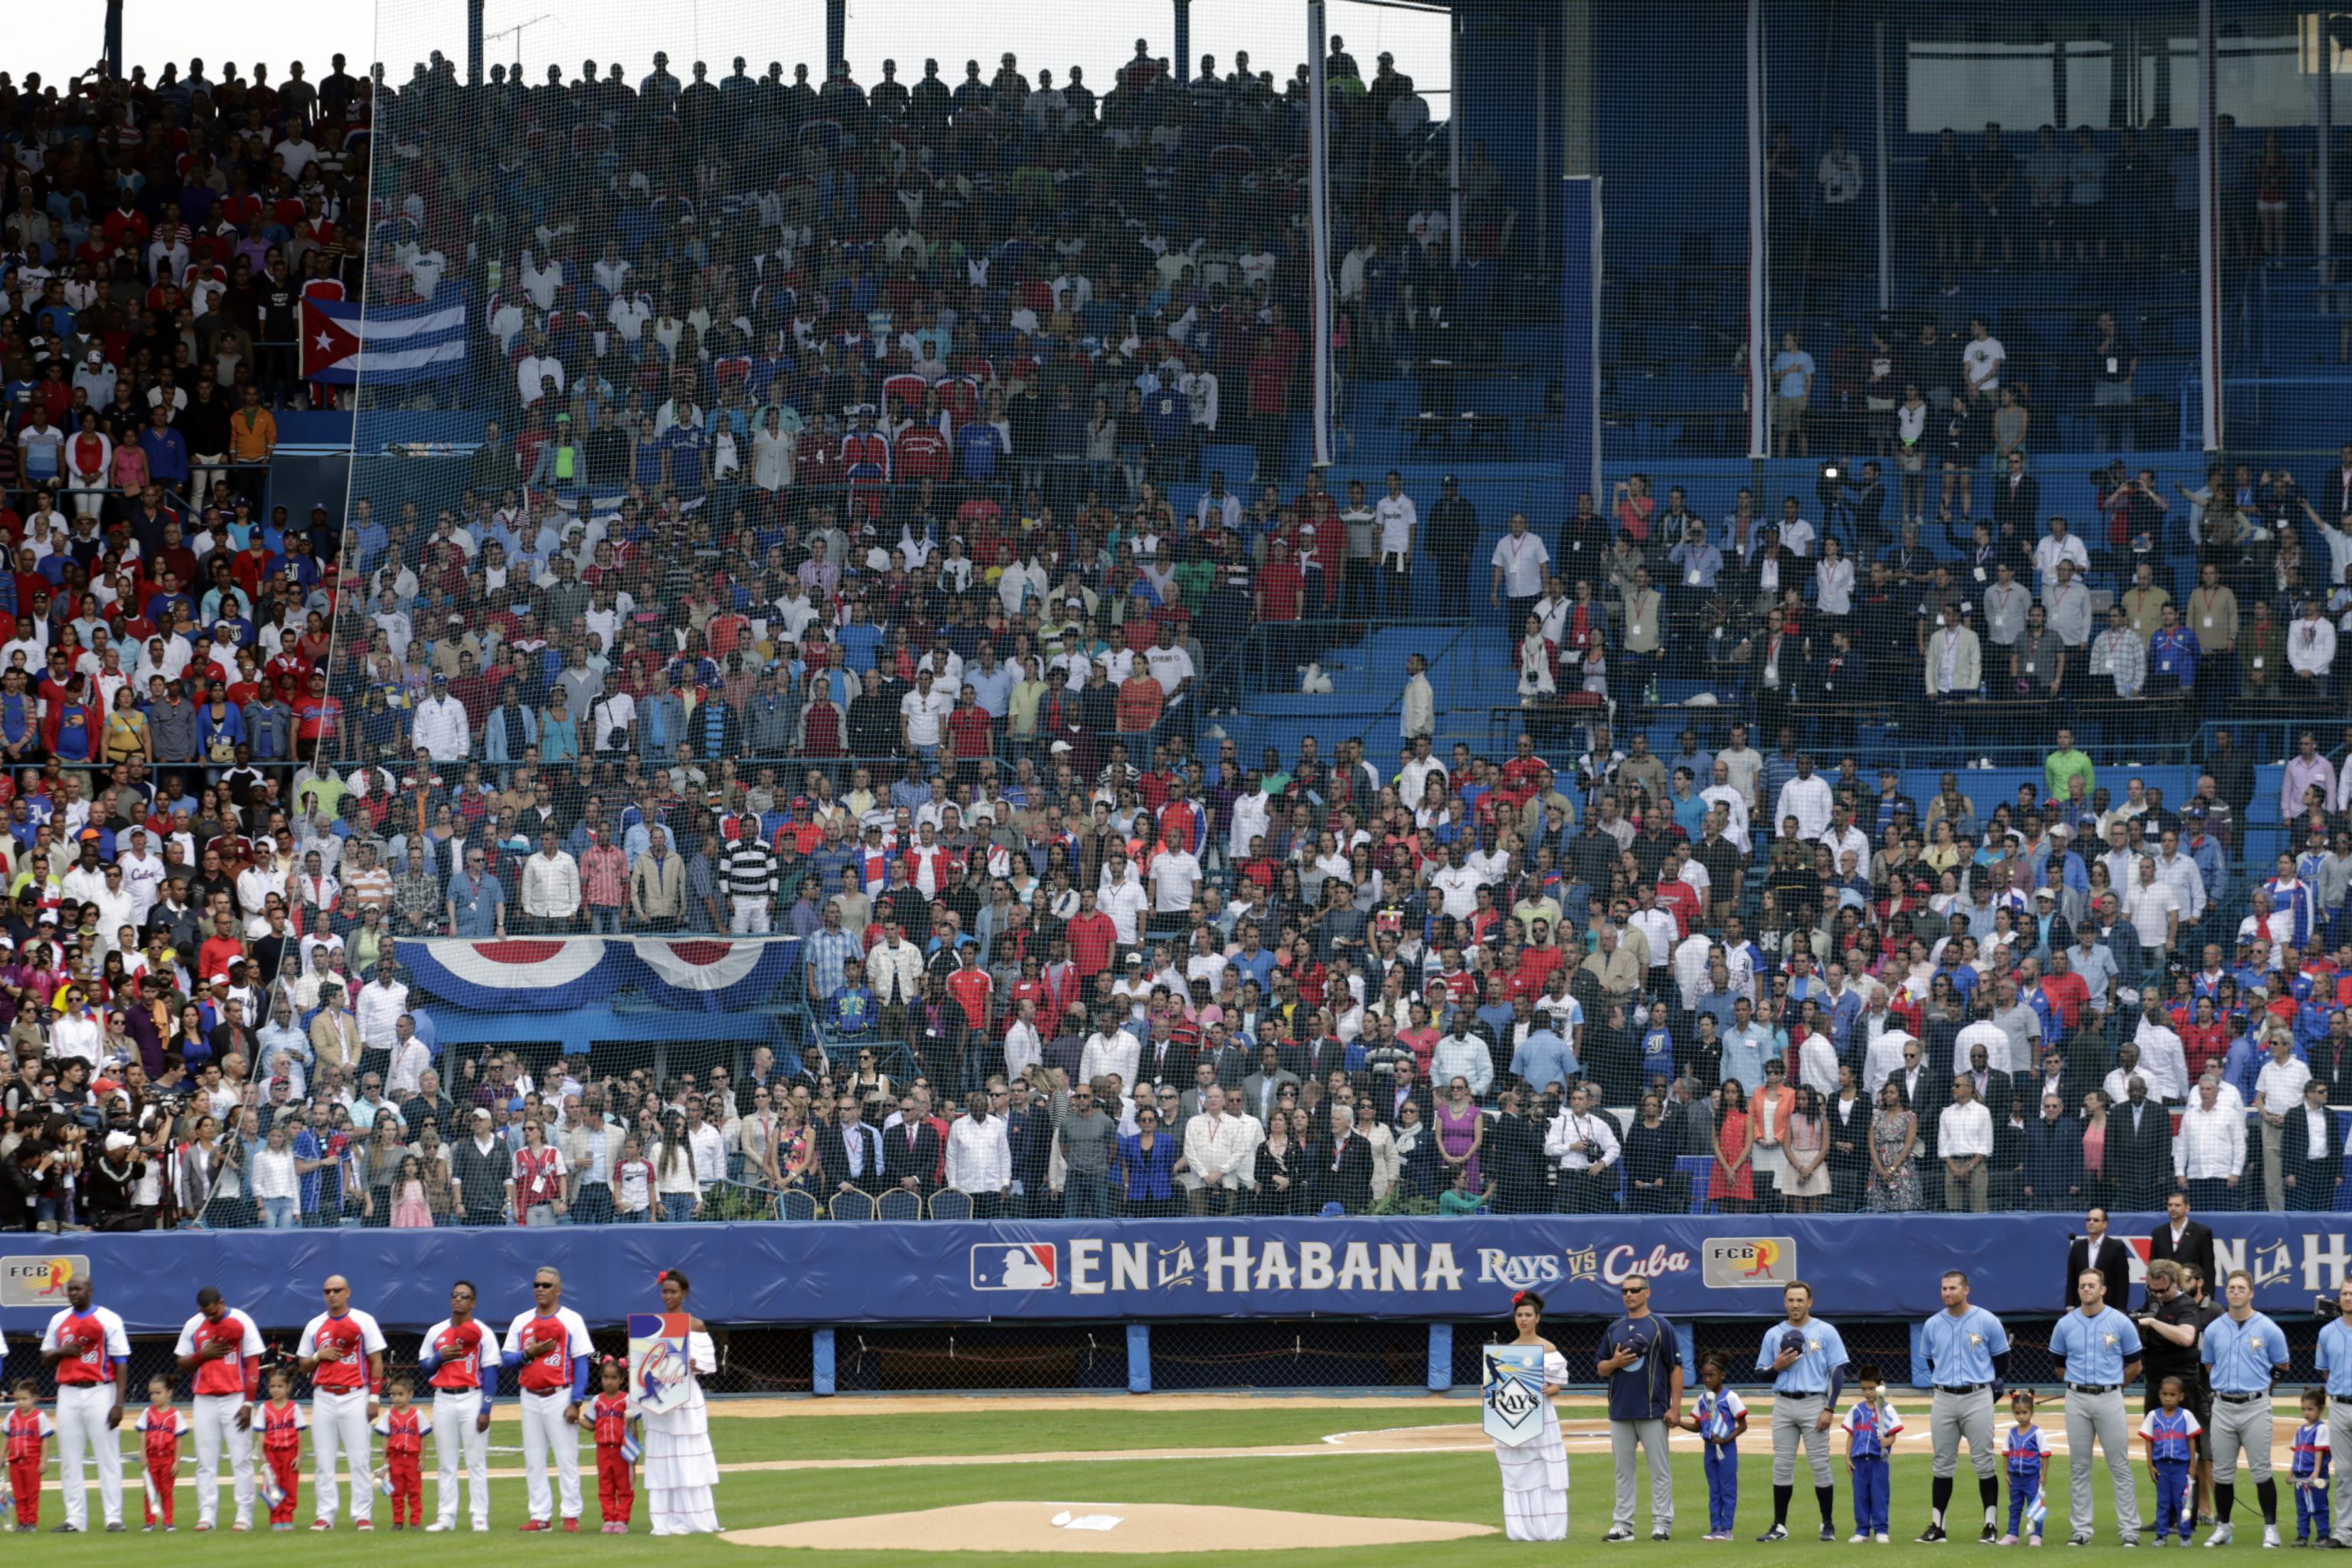 Cuba Will Fight for Victory vs Tampa Bay Baseball Team – Escambray